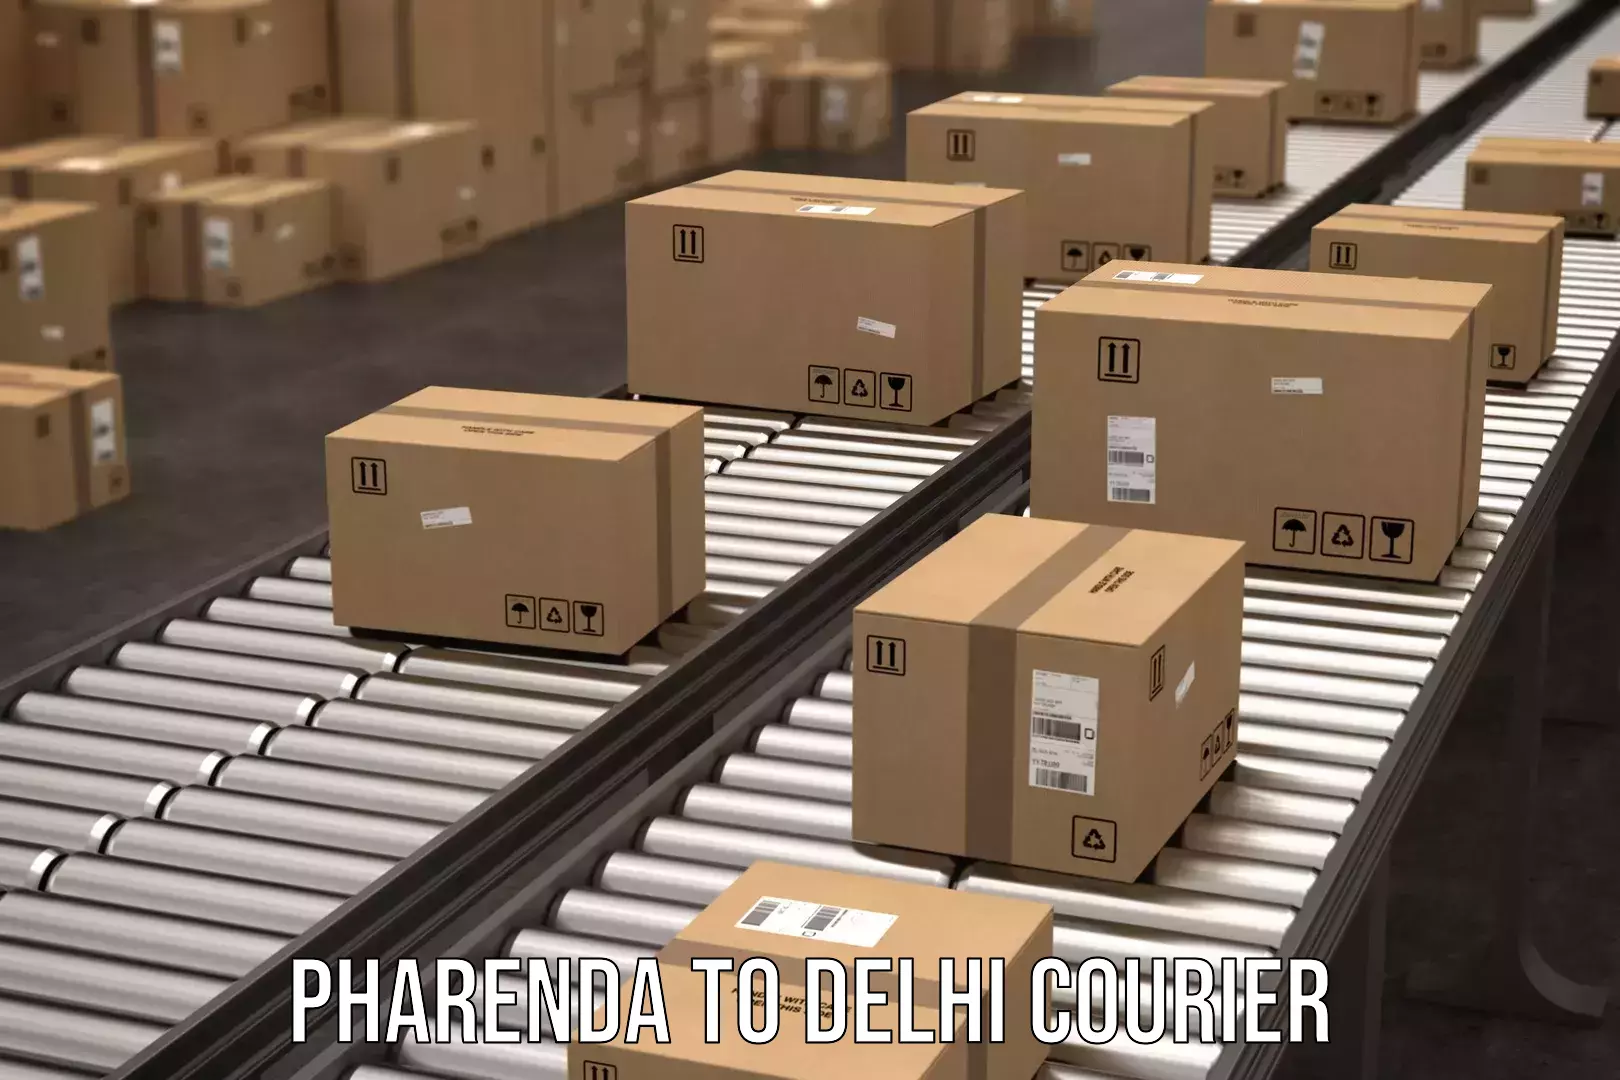 Professional courier handling Pharenda to NCR